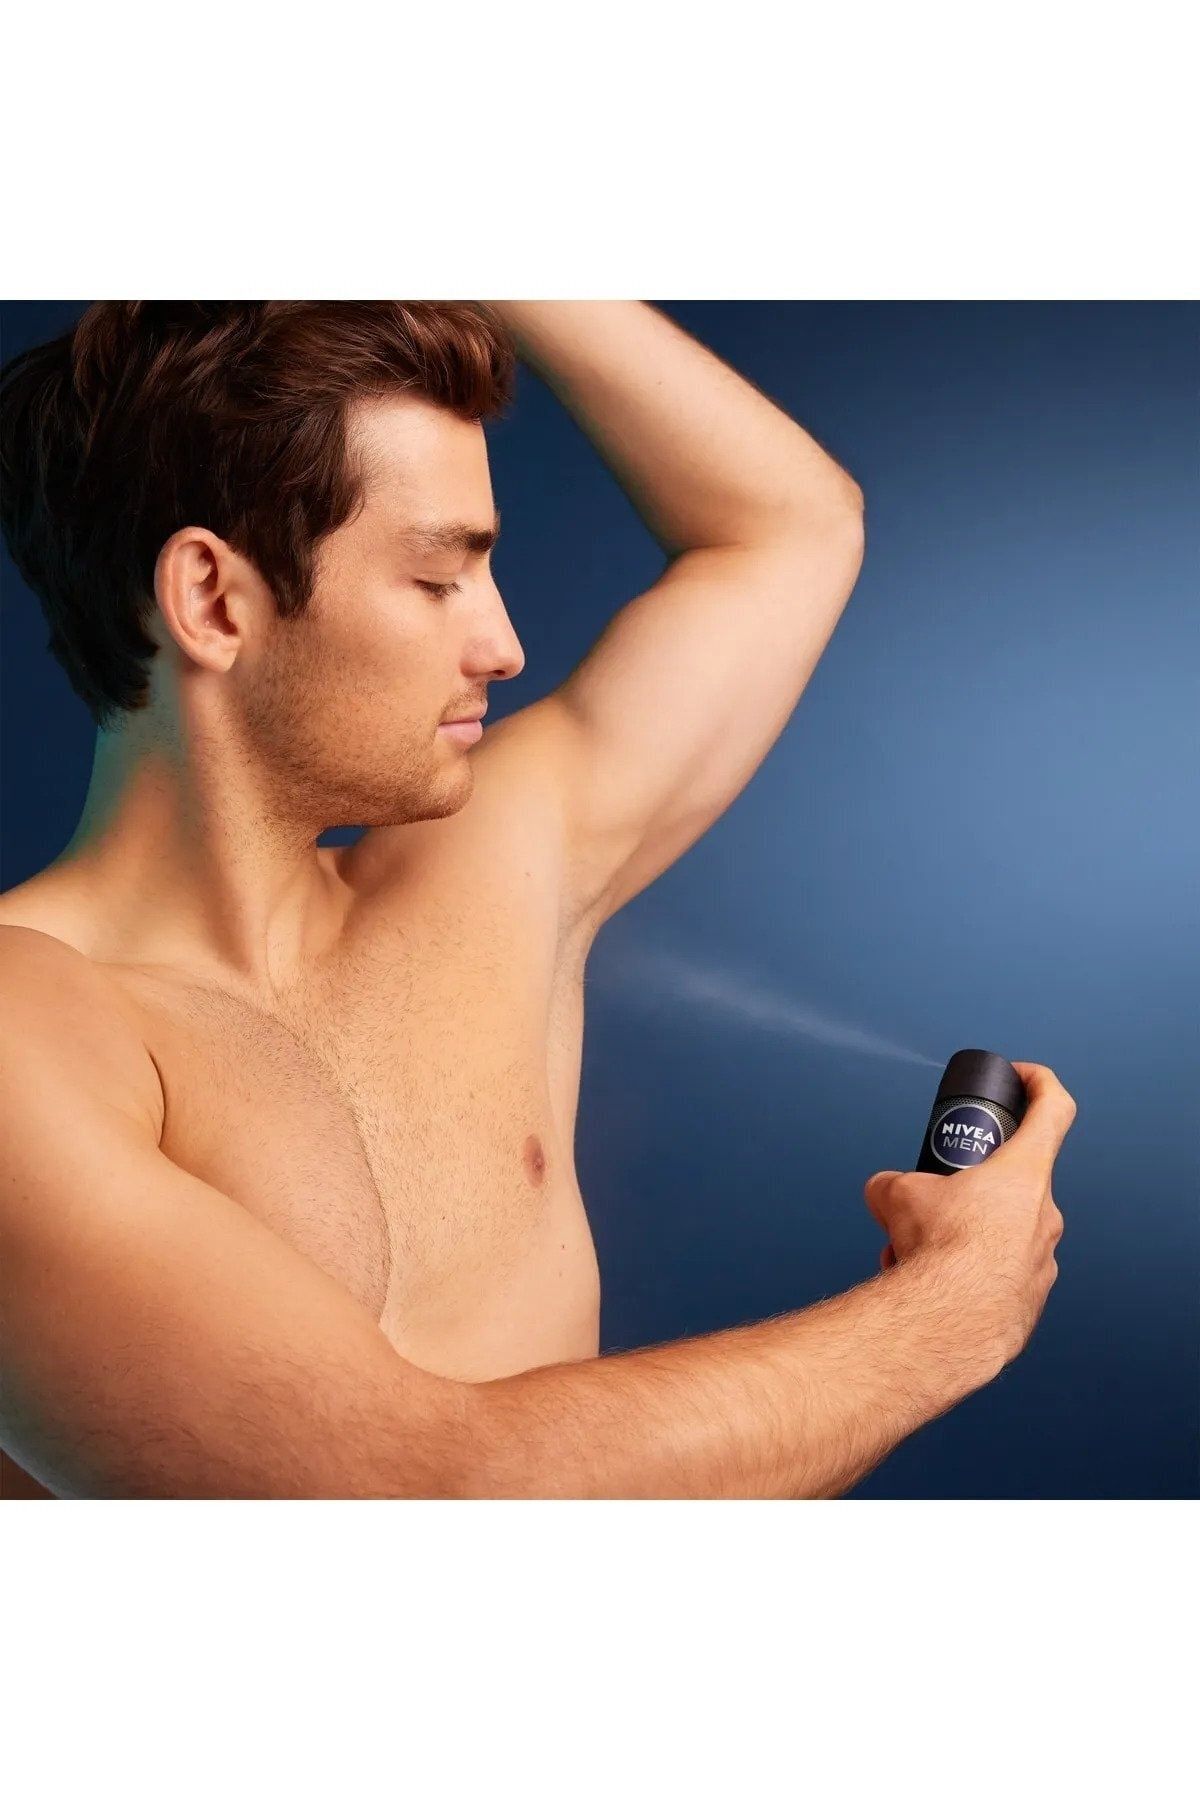 NIVEA اسپری ضد تعریق مردانه با بوی چوبی عمیق 150 میلی لیتر بسته 6 مزیتی